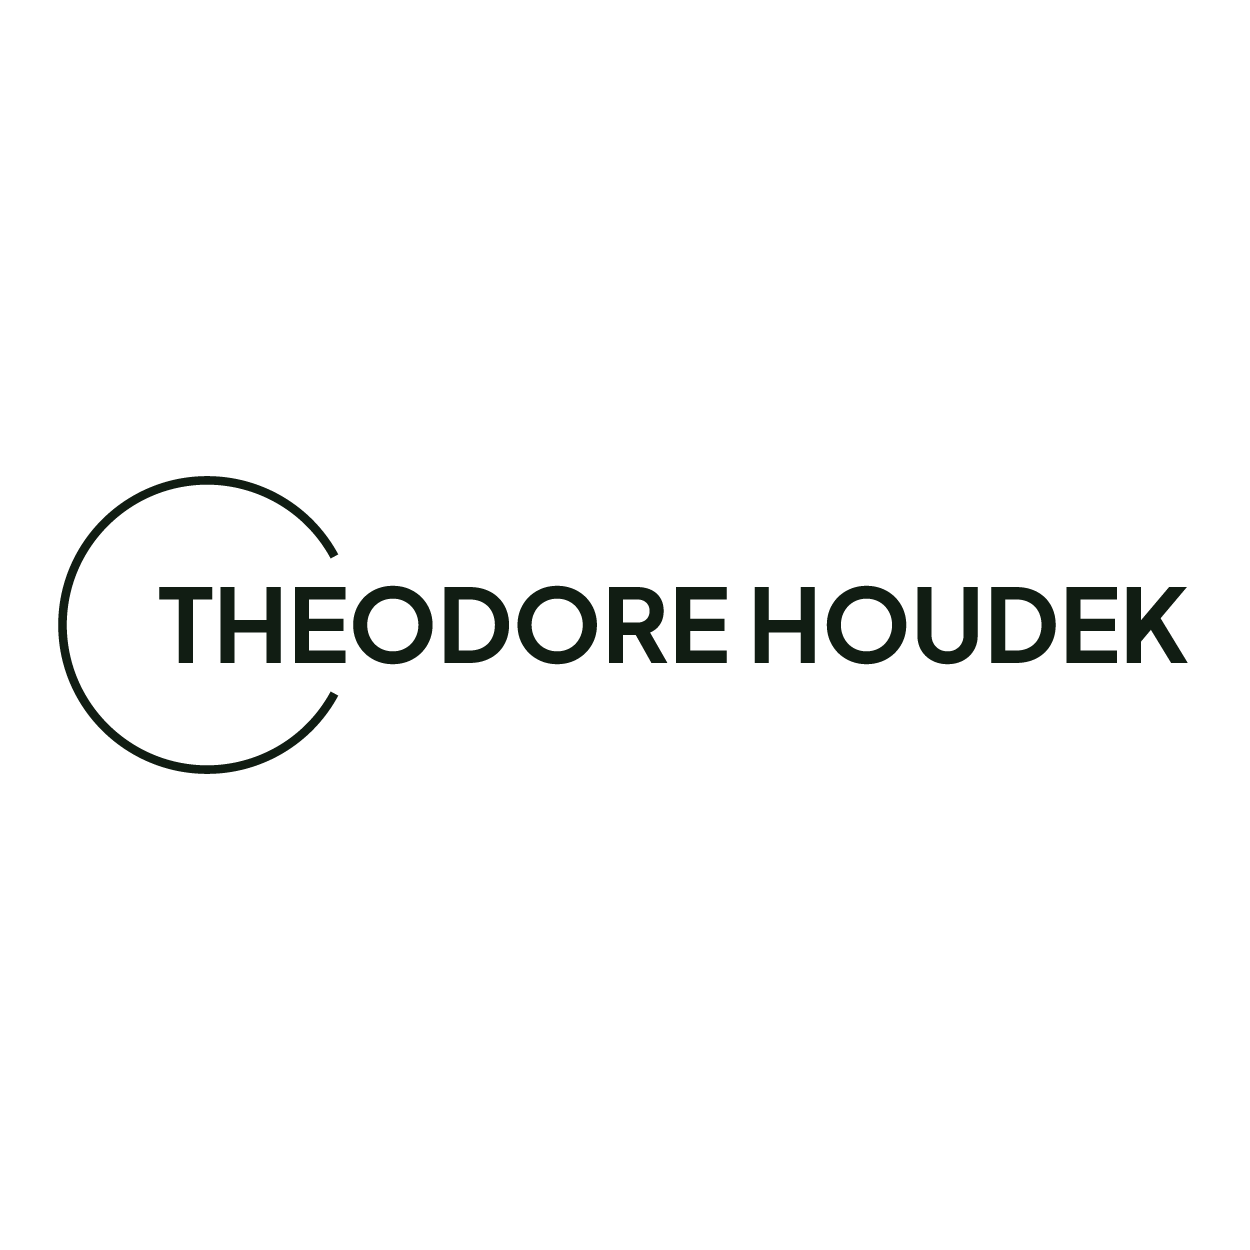 Theodore Houdek